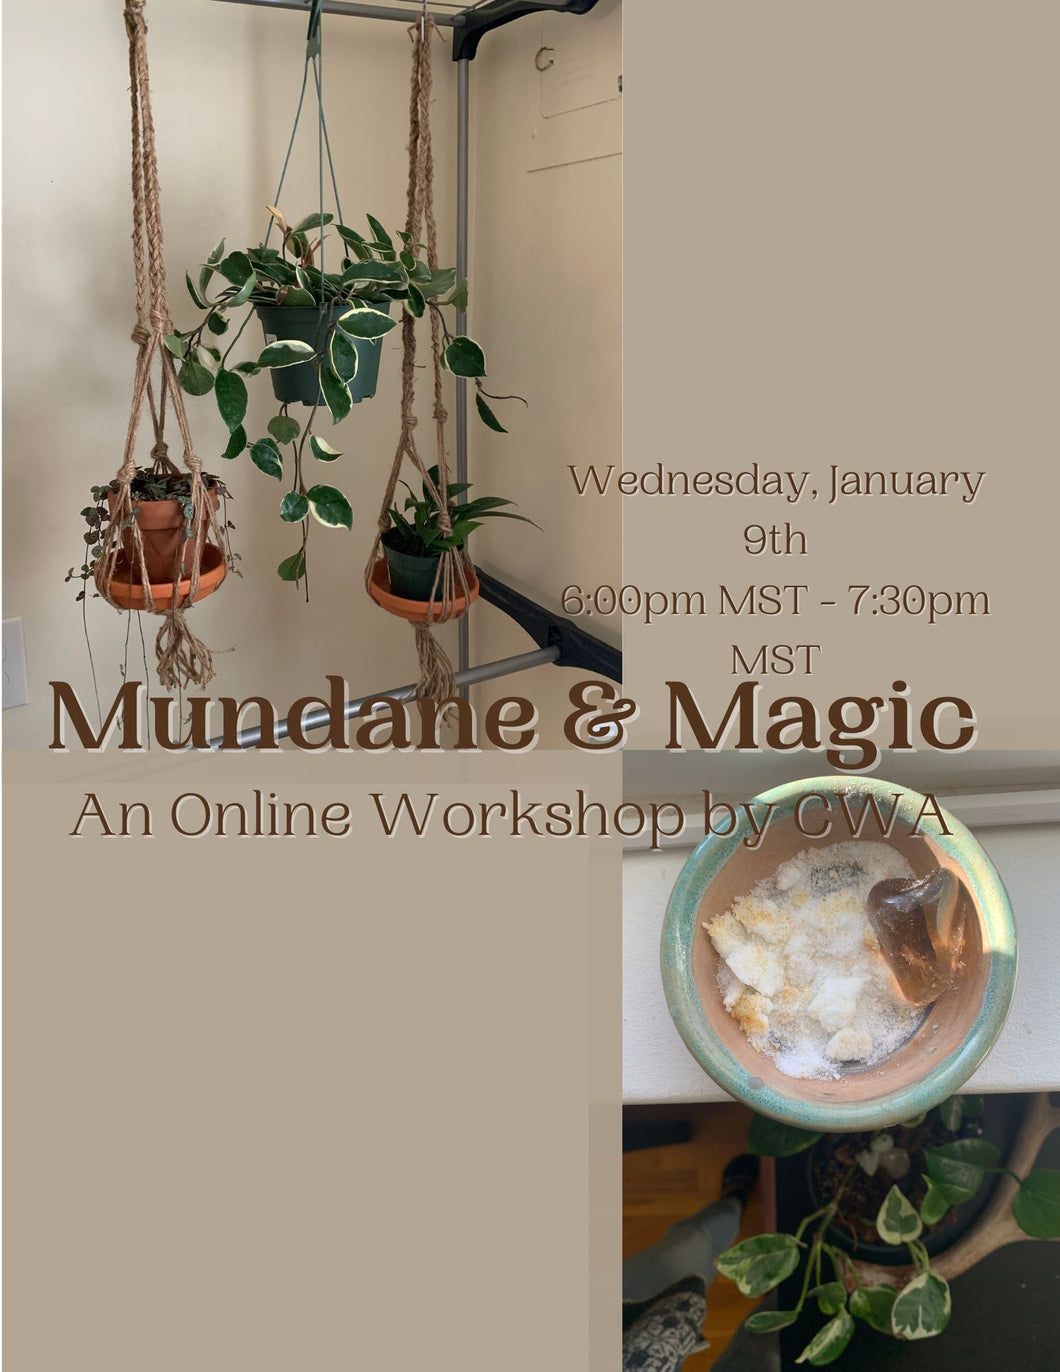 Mundane & Magic - An Online Workshop by CWA